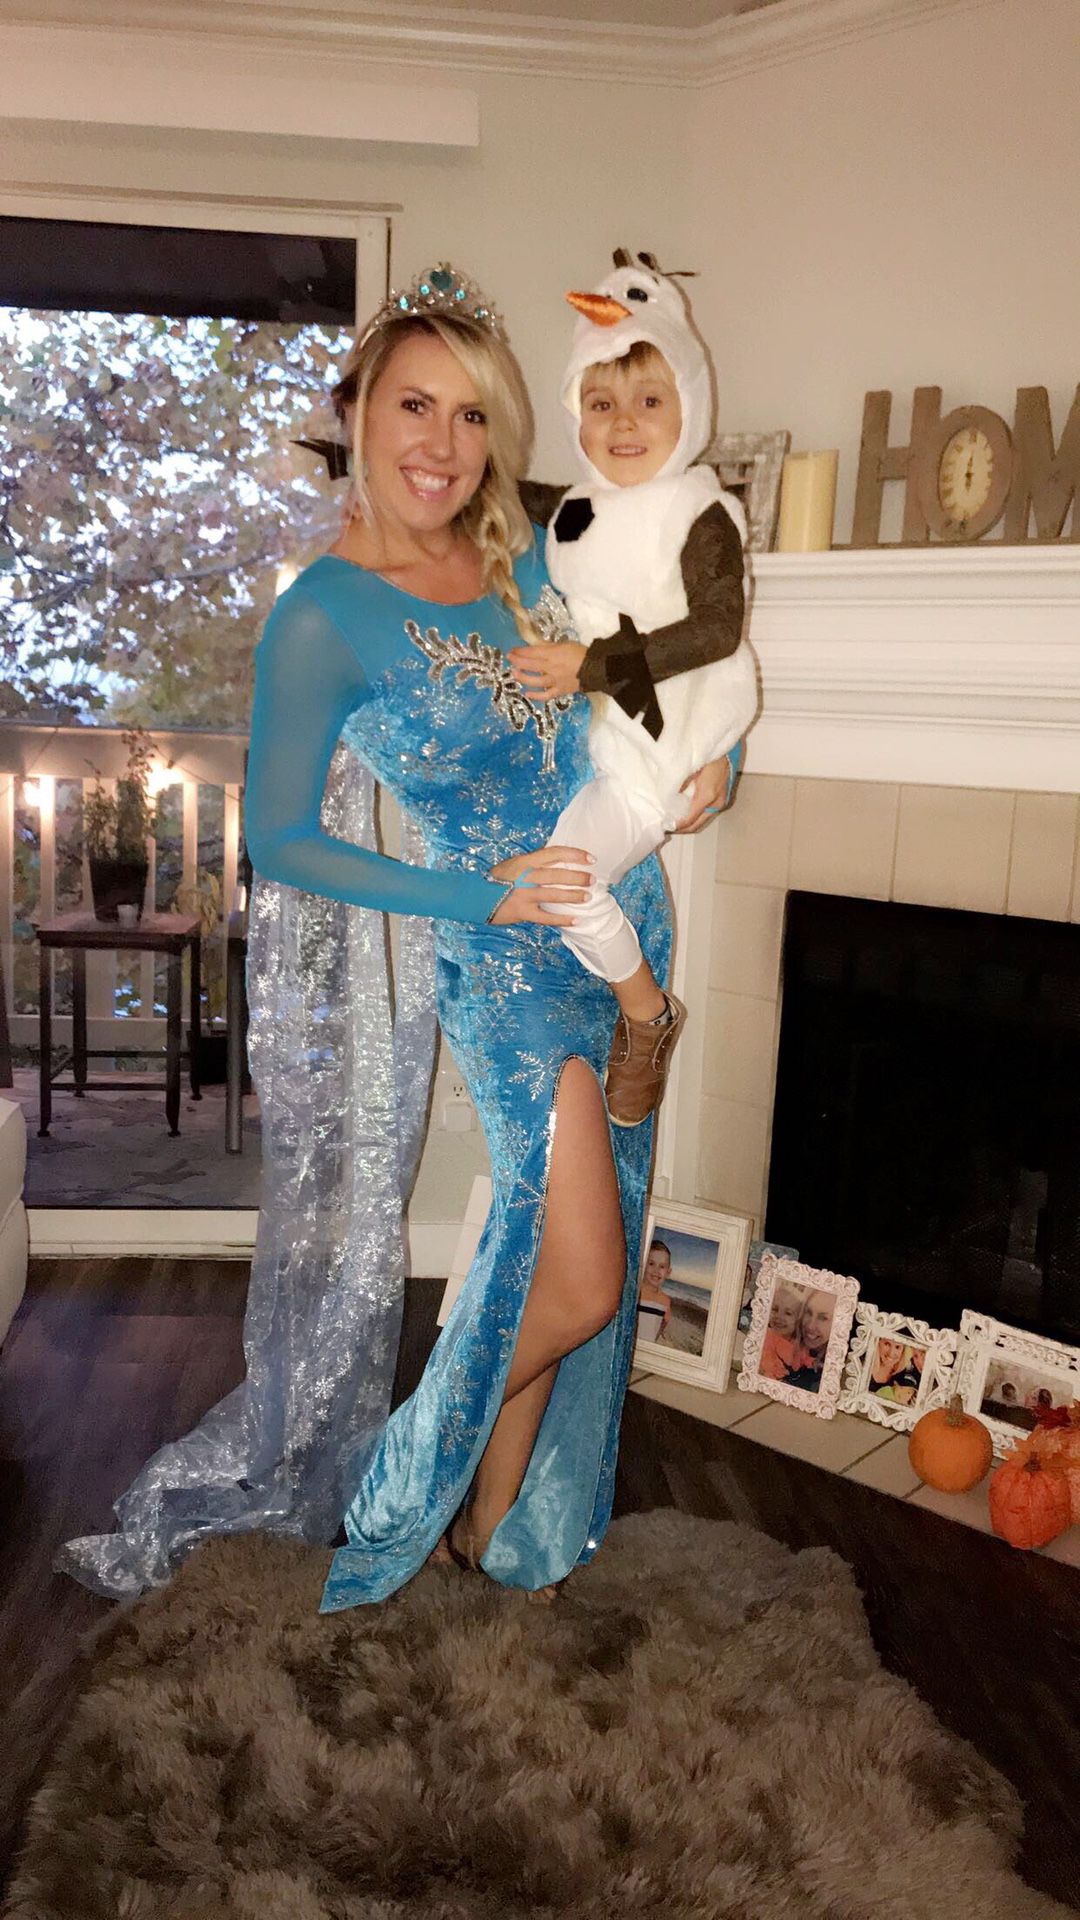 Disney Olaf costume